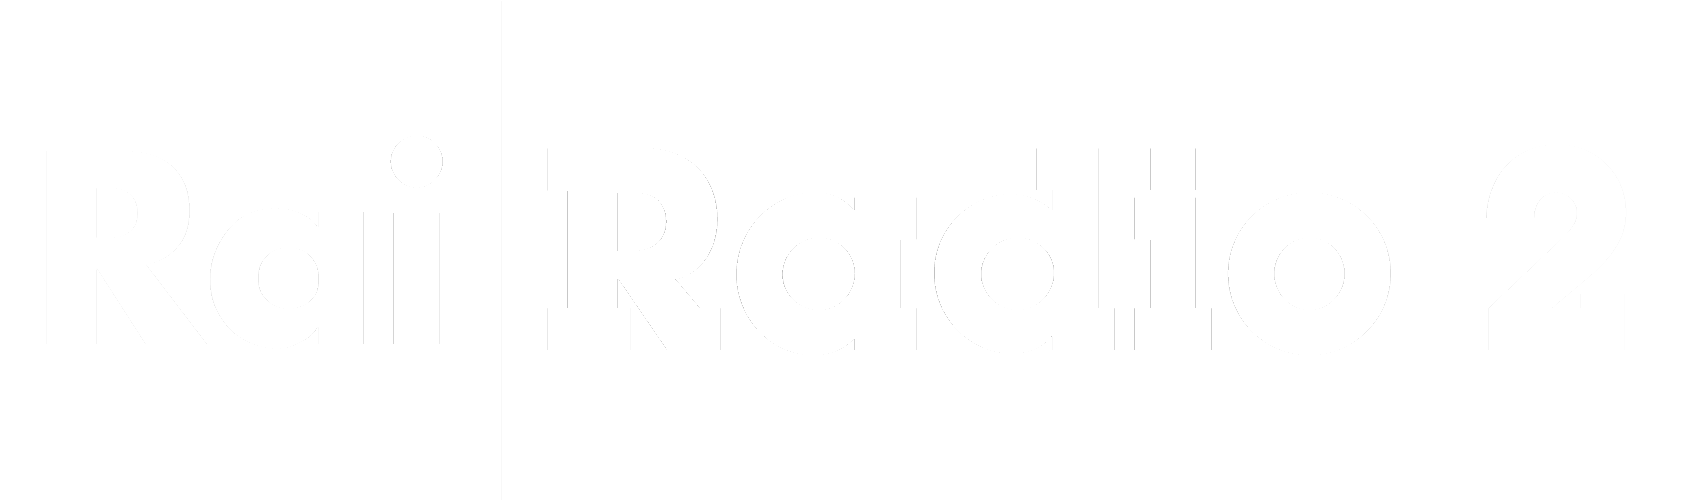 logo-rairadio2